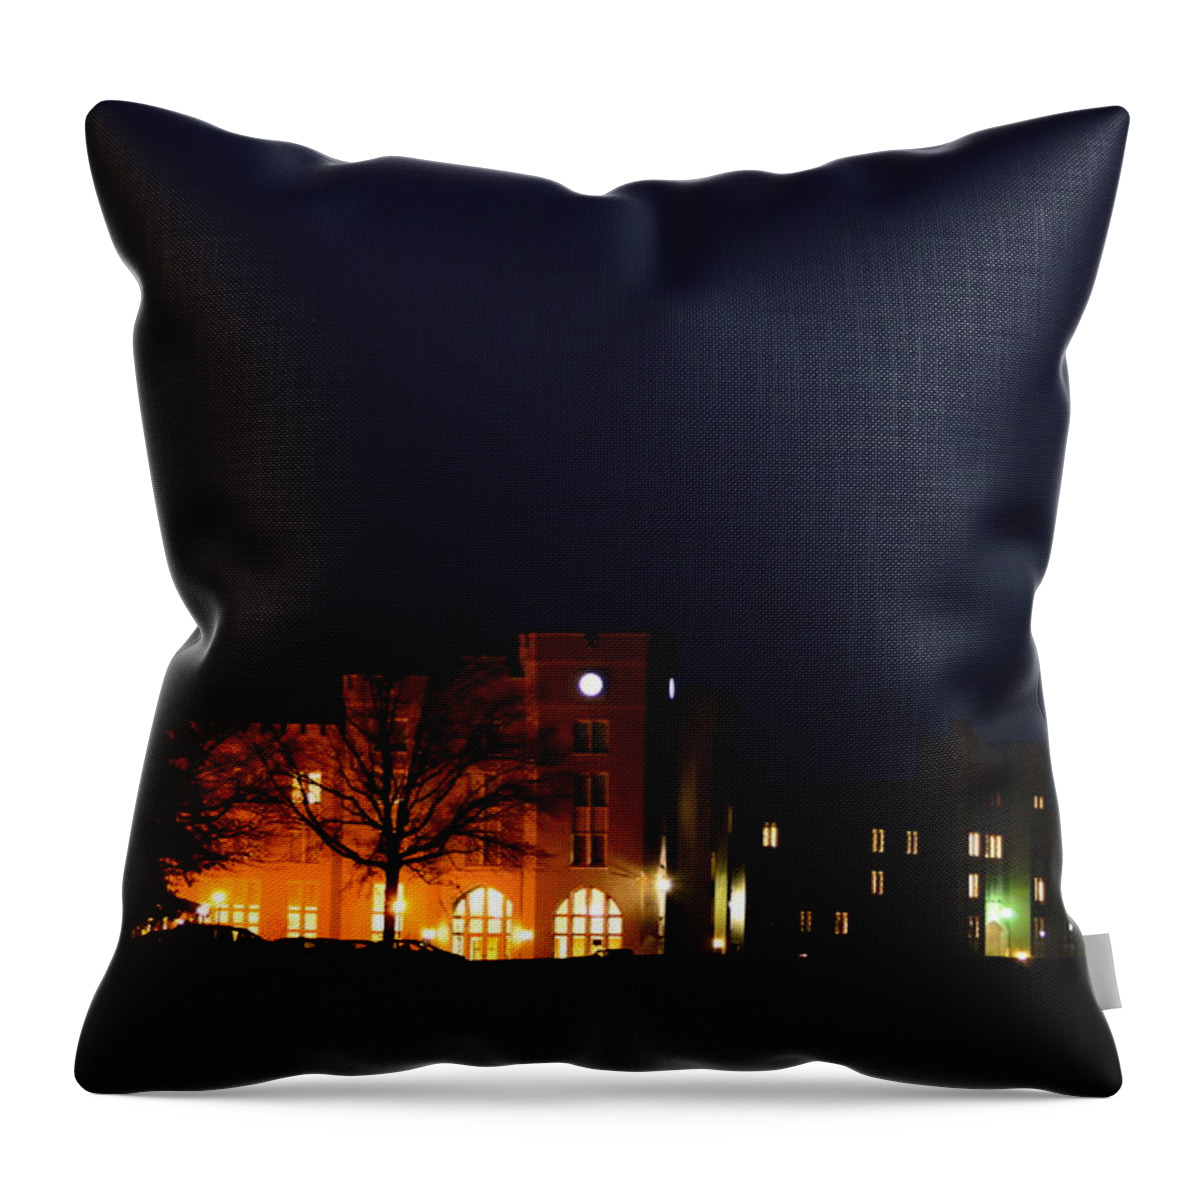 Wmi Throw Pillow featuring the photograph VMI Night Lights by Cathy Shiflett